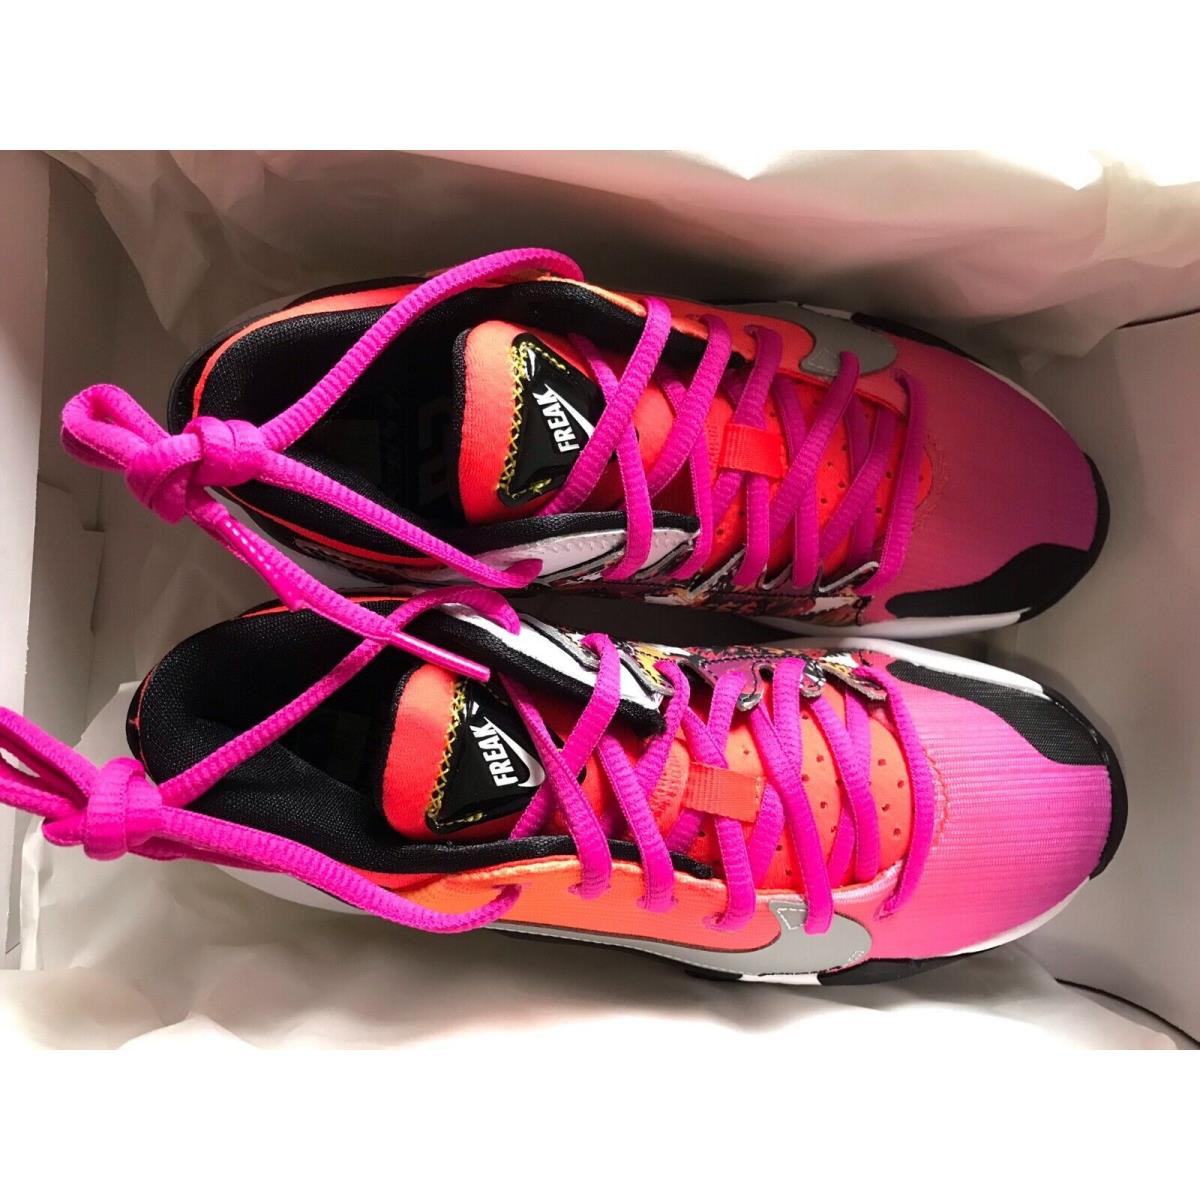 Nike shoes FREAK - Bright Crimson/Fire Pink/White/Black 8